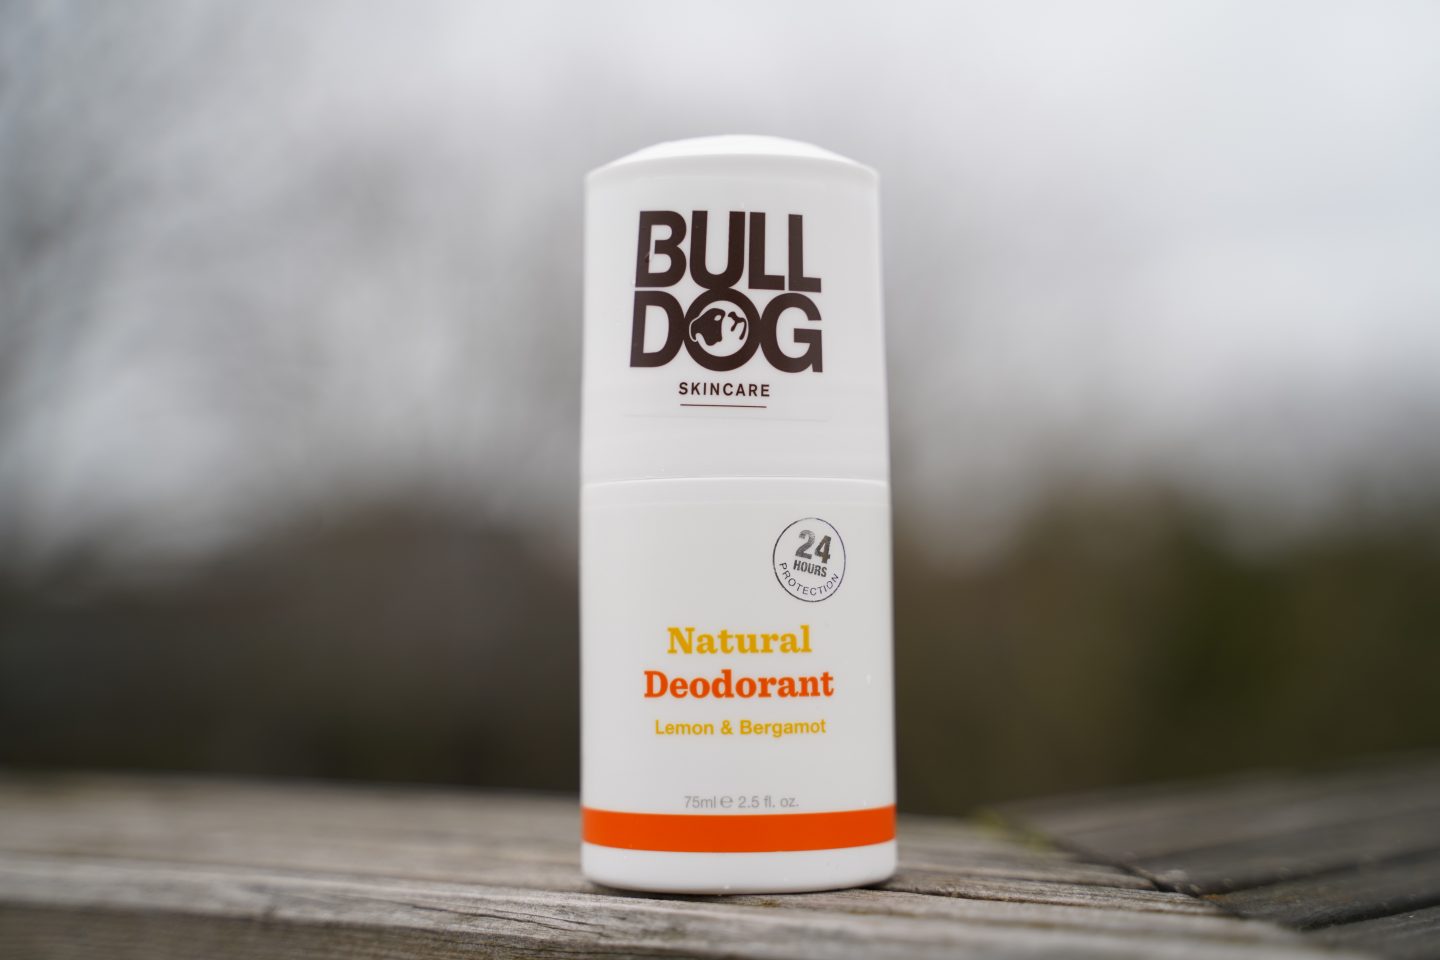 Maketh_the_man-Anton_welcome-bulldog_skincare_natural_deodorant-lemon_bergamot